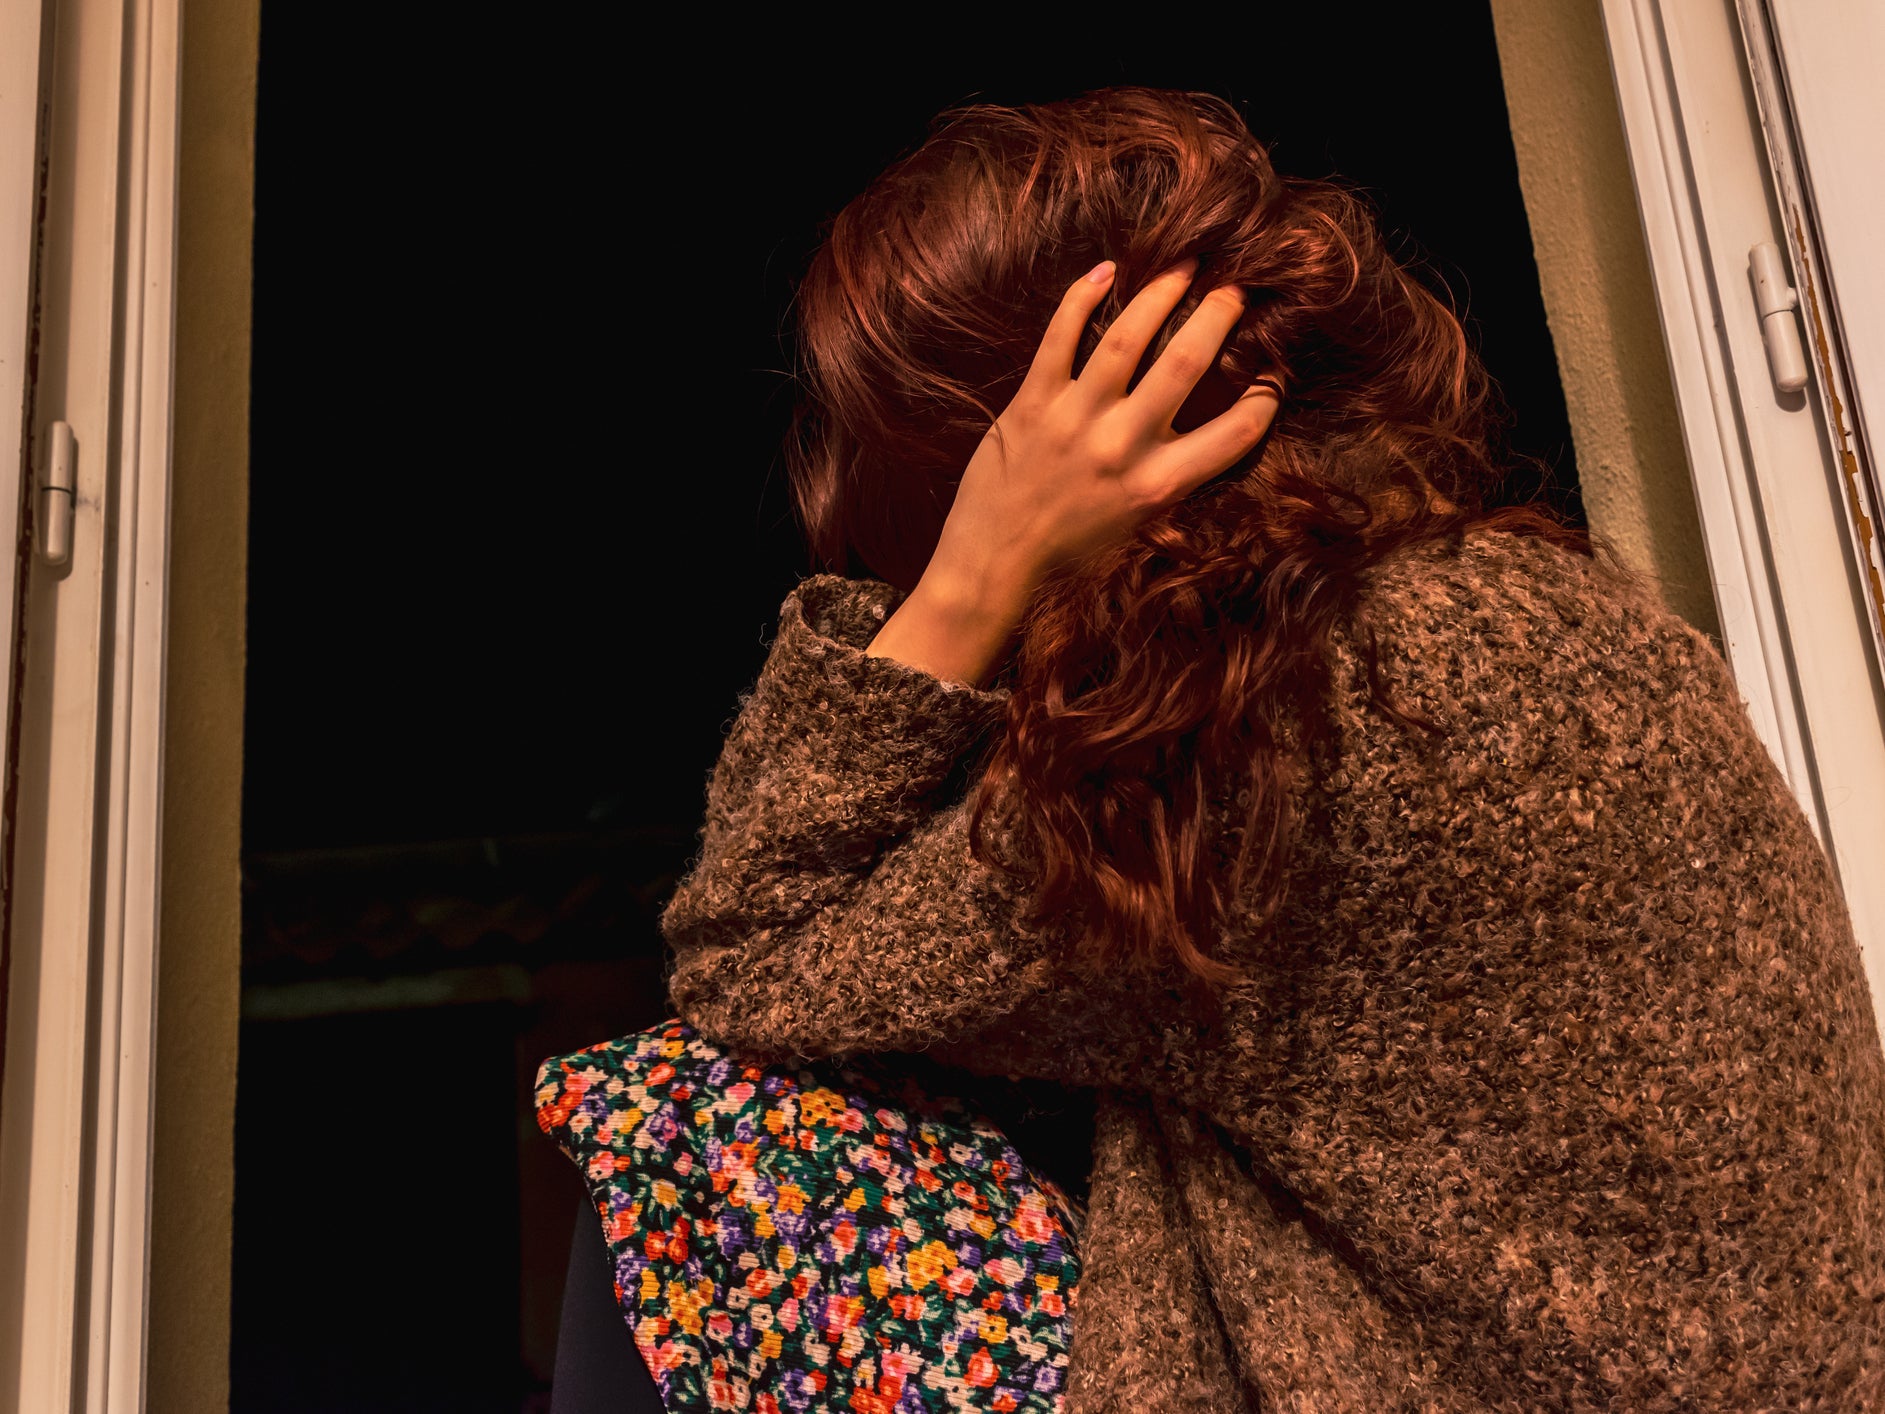 Women experiencing violence say it escalated under&nbsp;lockdown, studies find